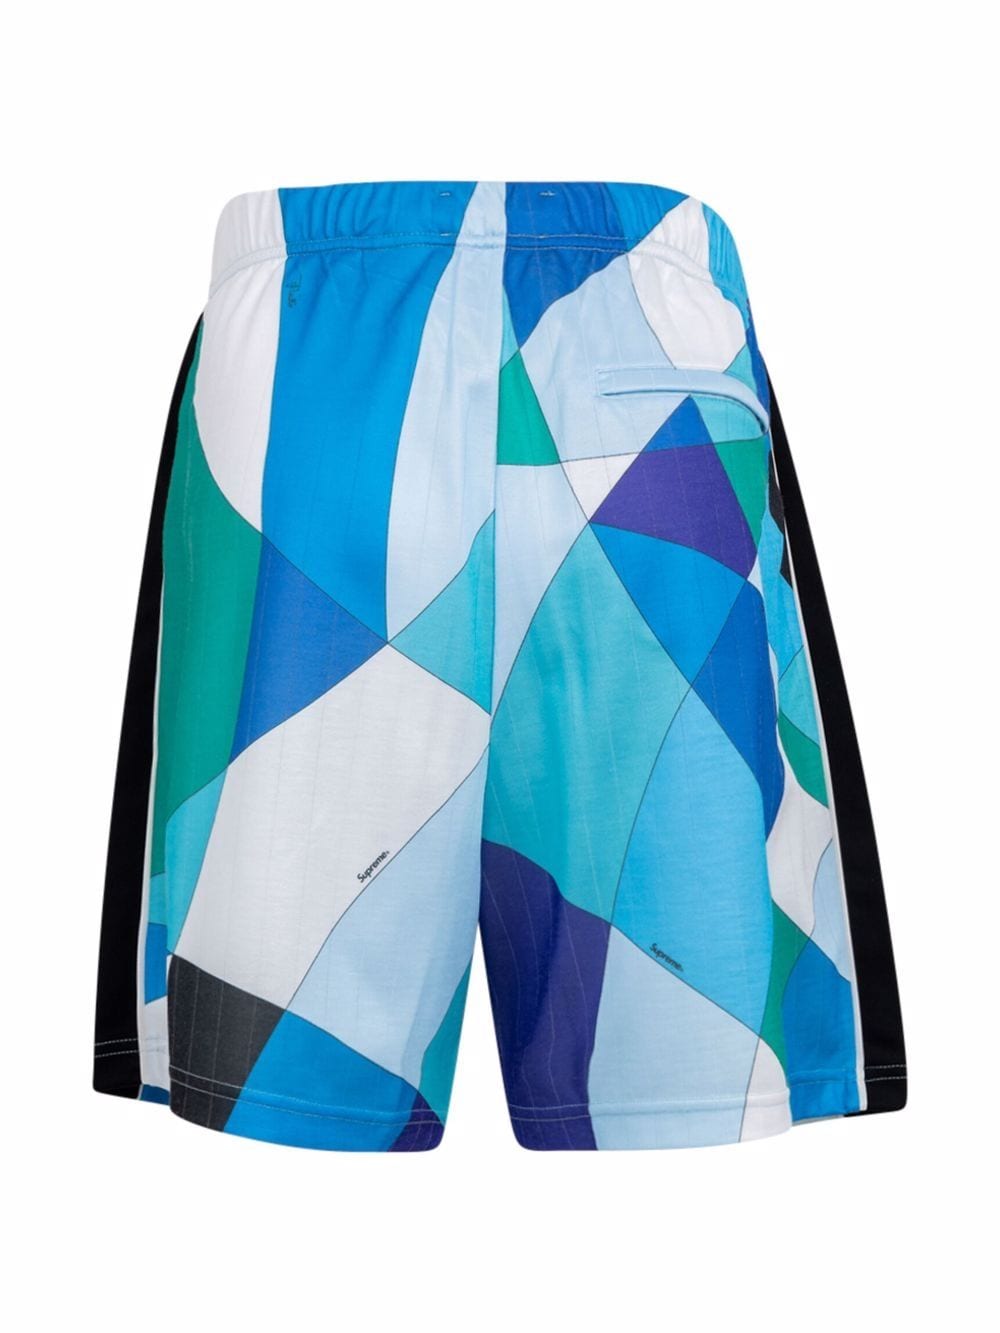 Supreme x Umbro Soccer Shorts - Farfetch